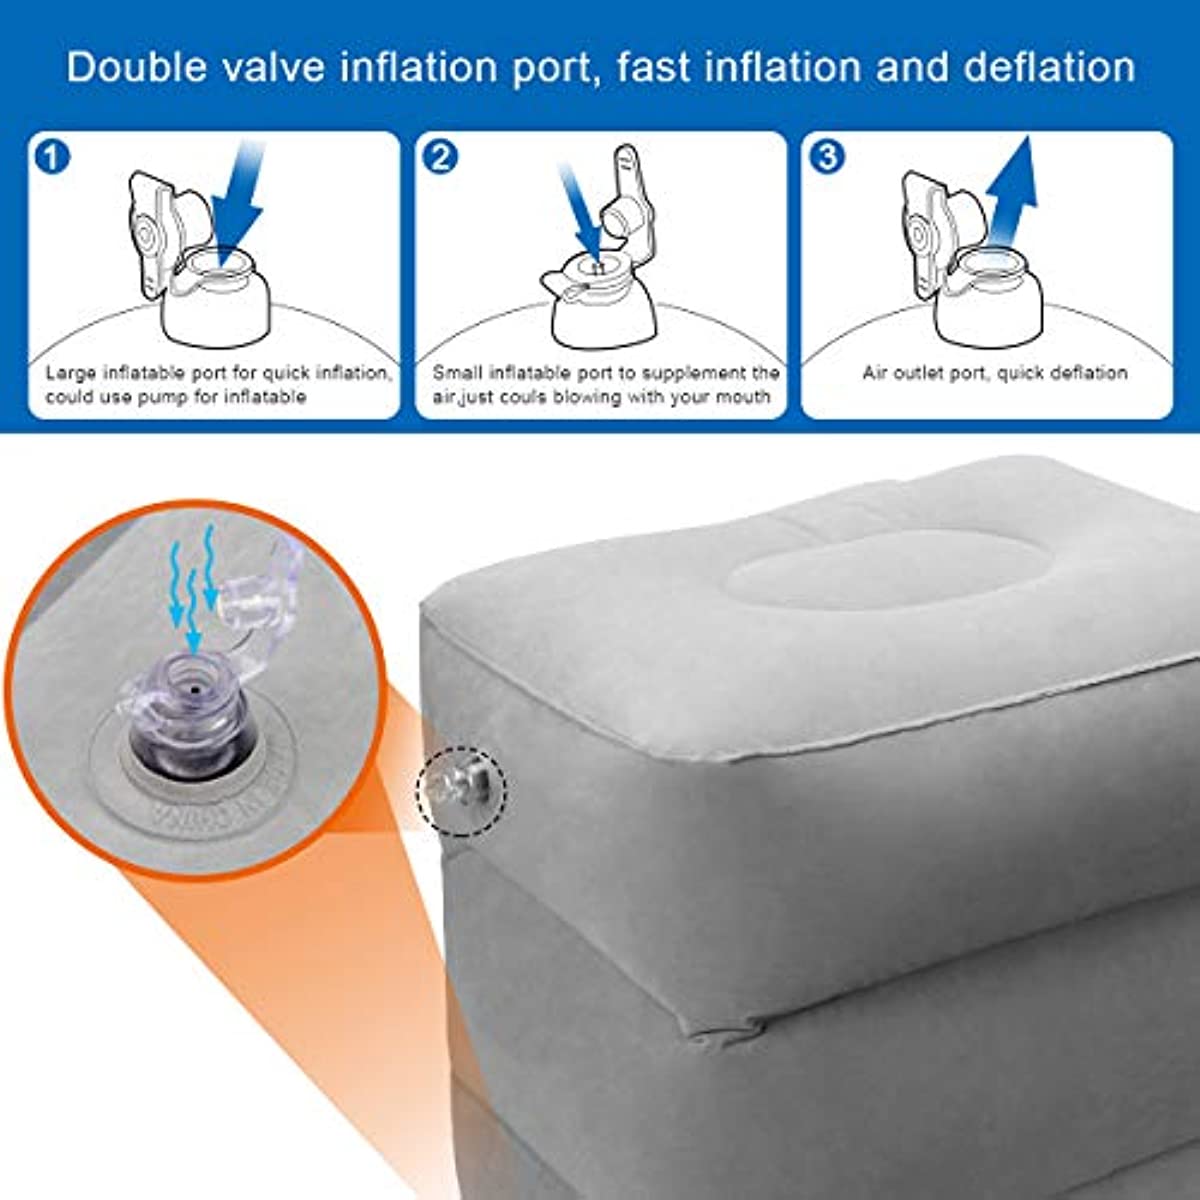 Inflatable leg cushion with pump